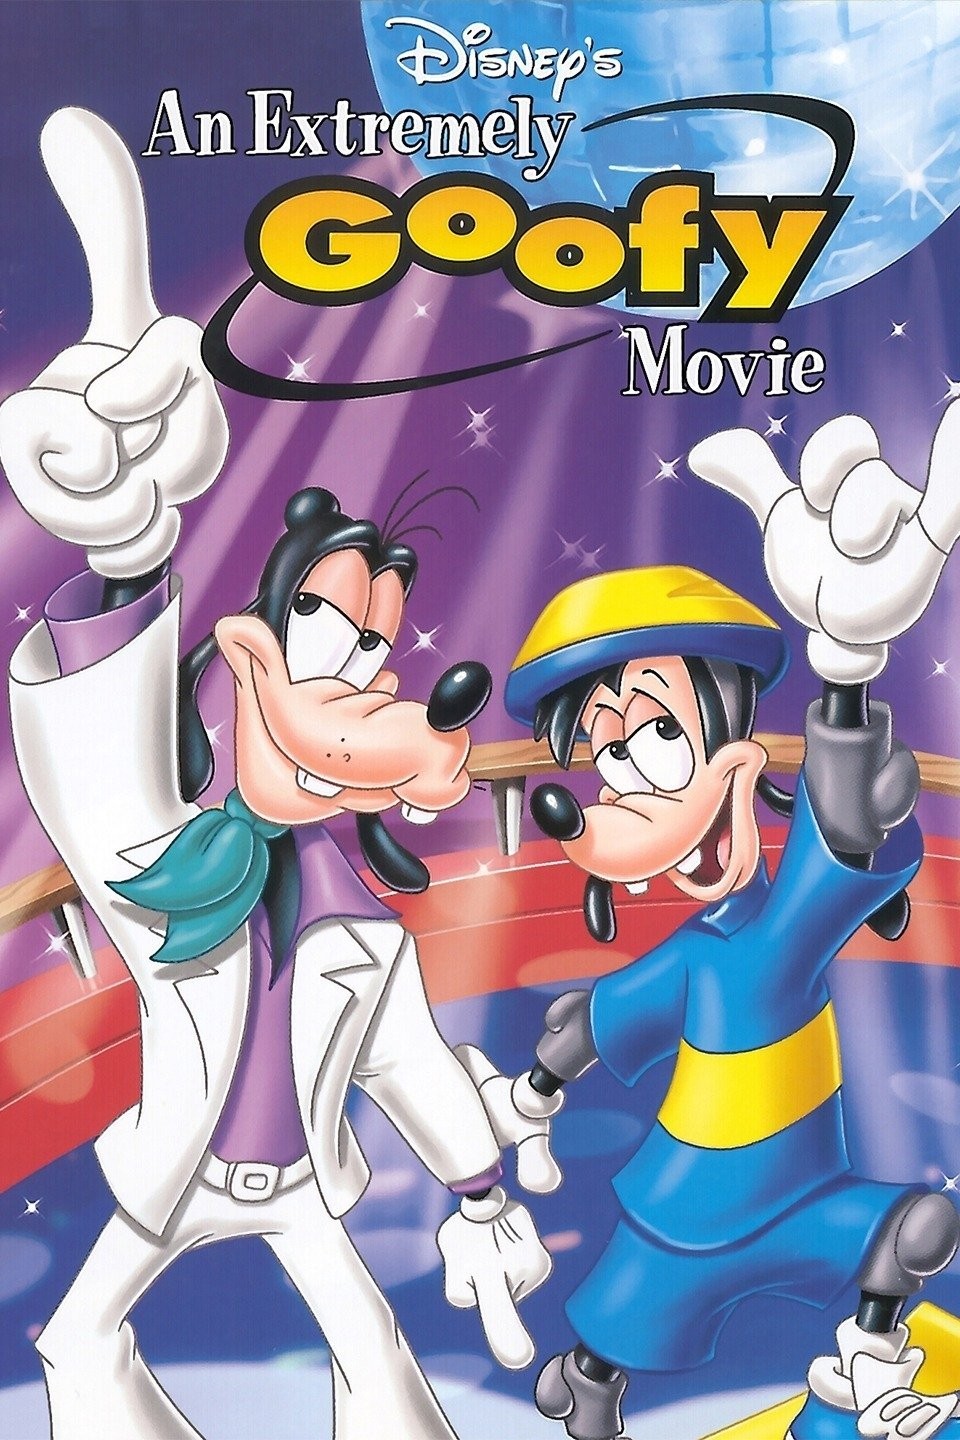 FULL MOVIE: An Extremely Goofy Movie (2000)